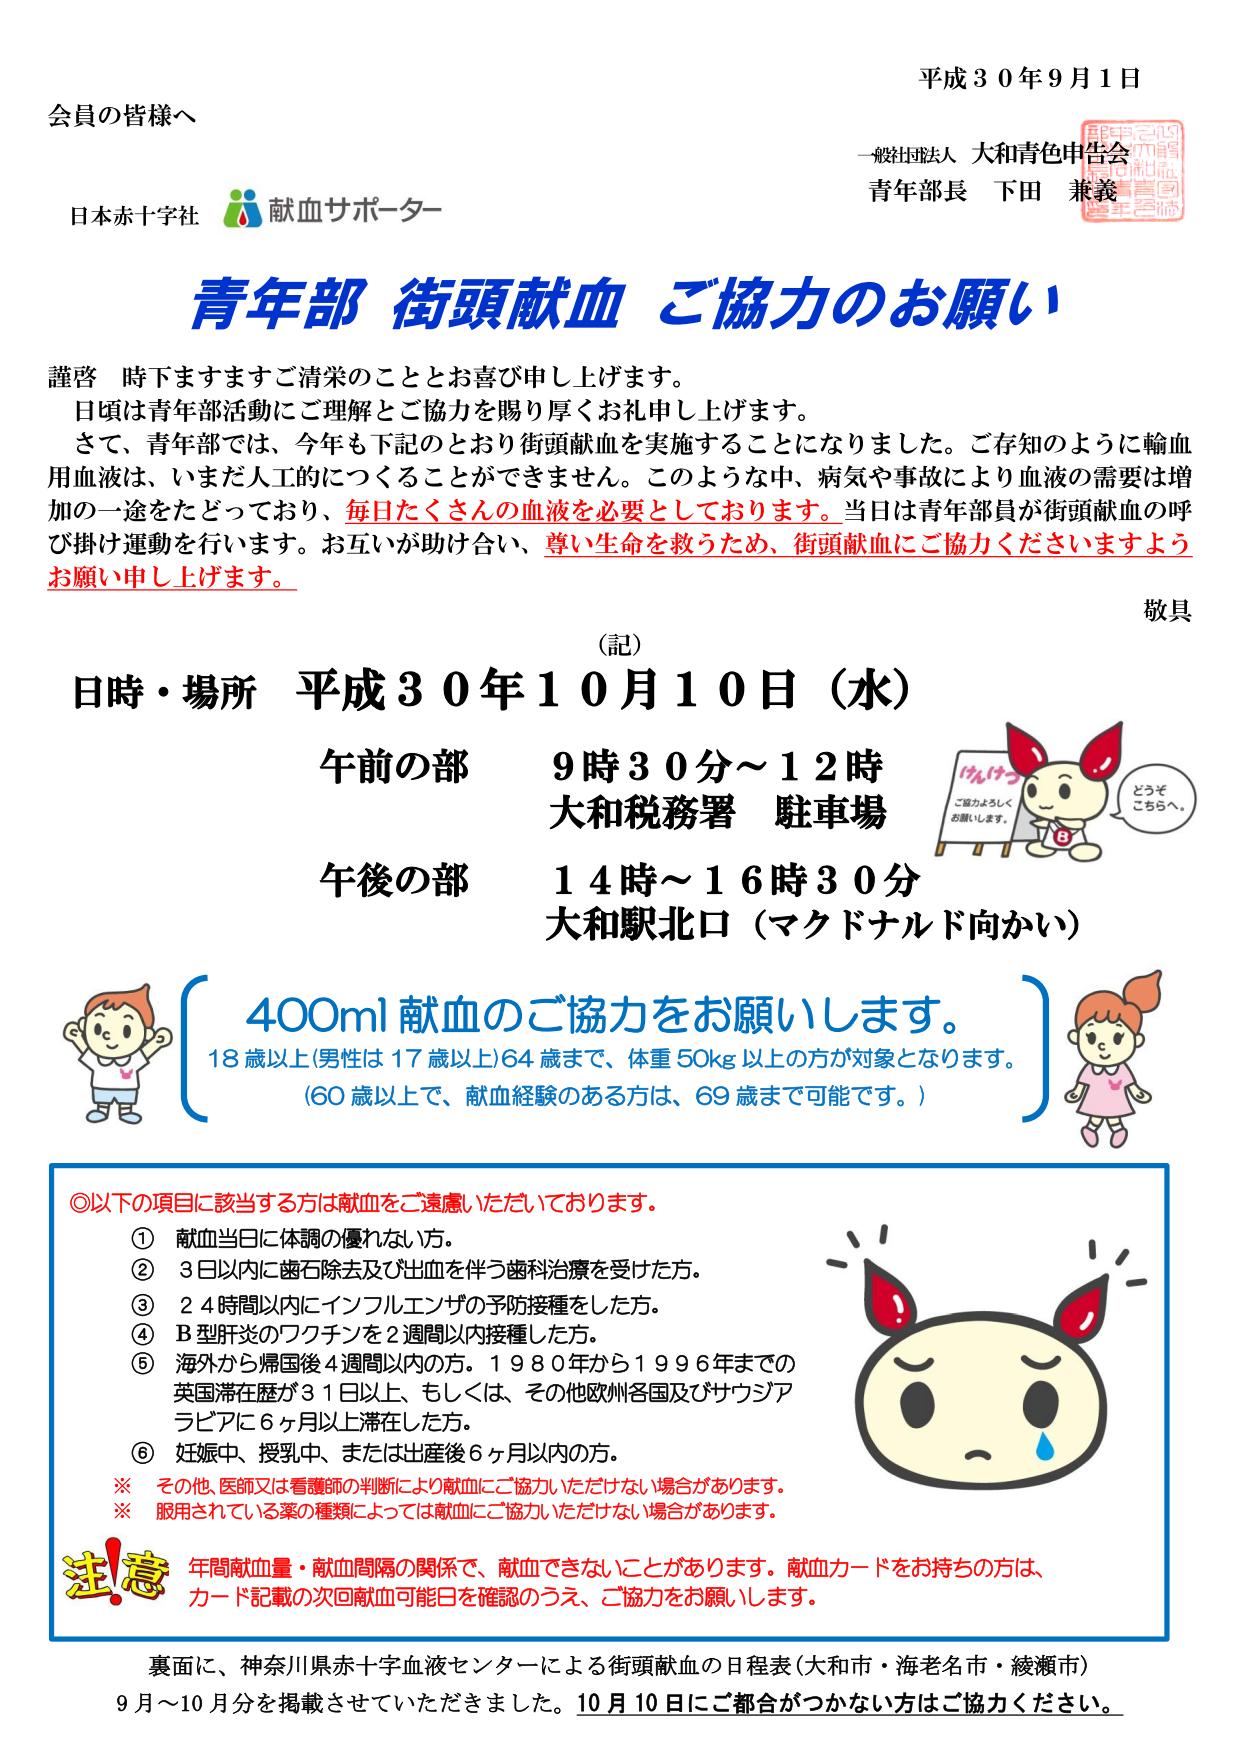 http://www.shokonet.or.jp/aoiro/yamato/news/kenketsu_2018-10-10_01.jpg